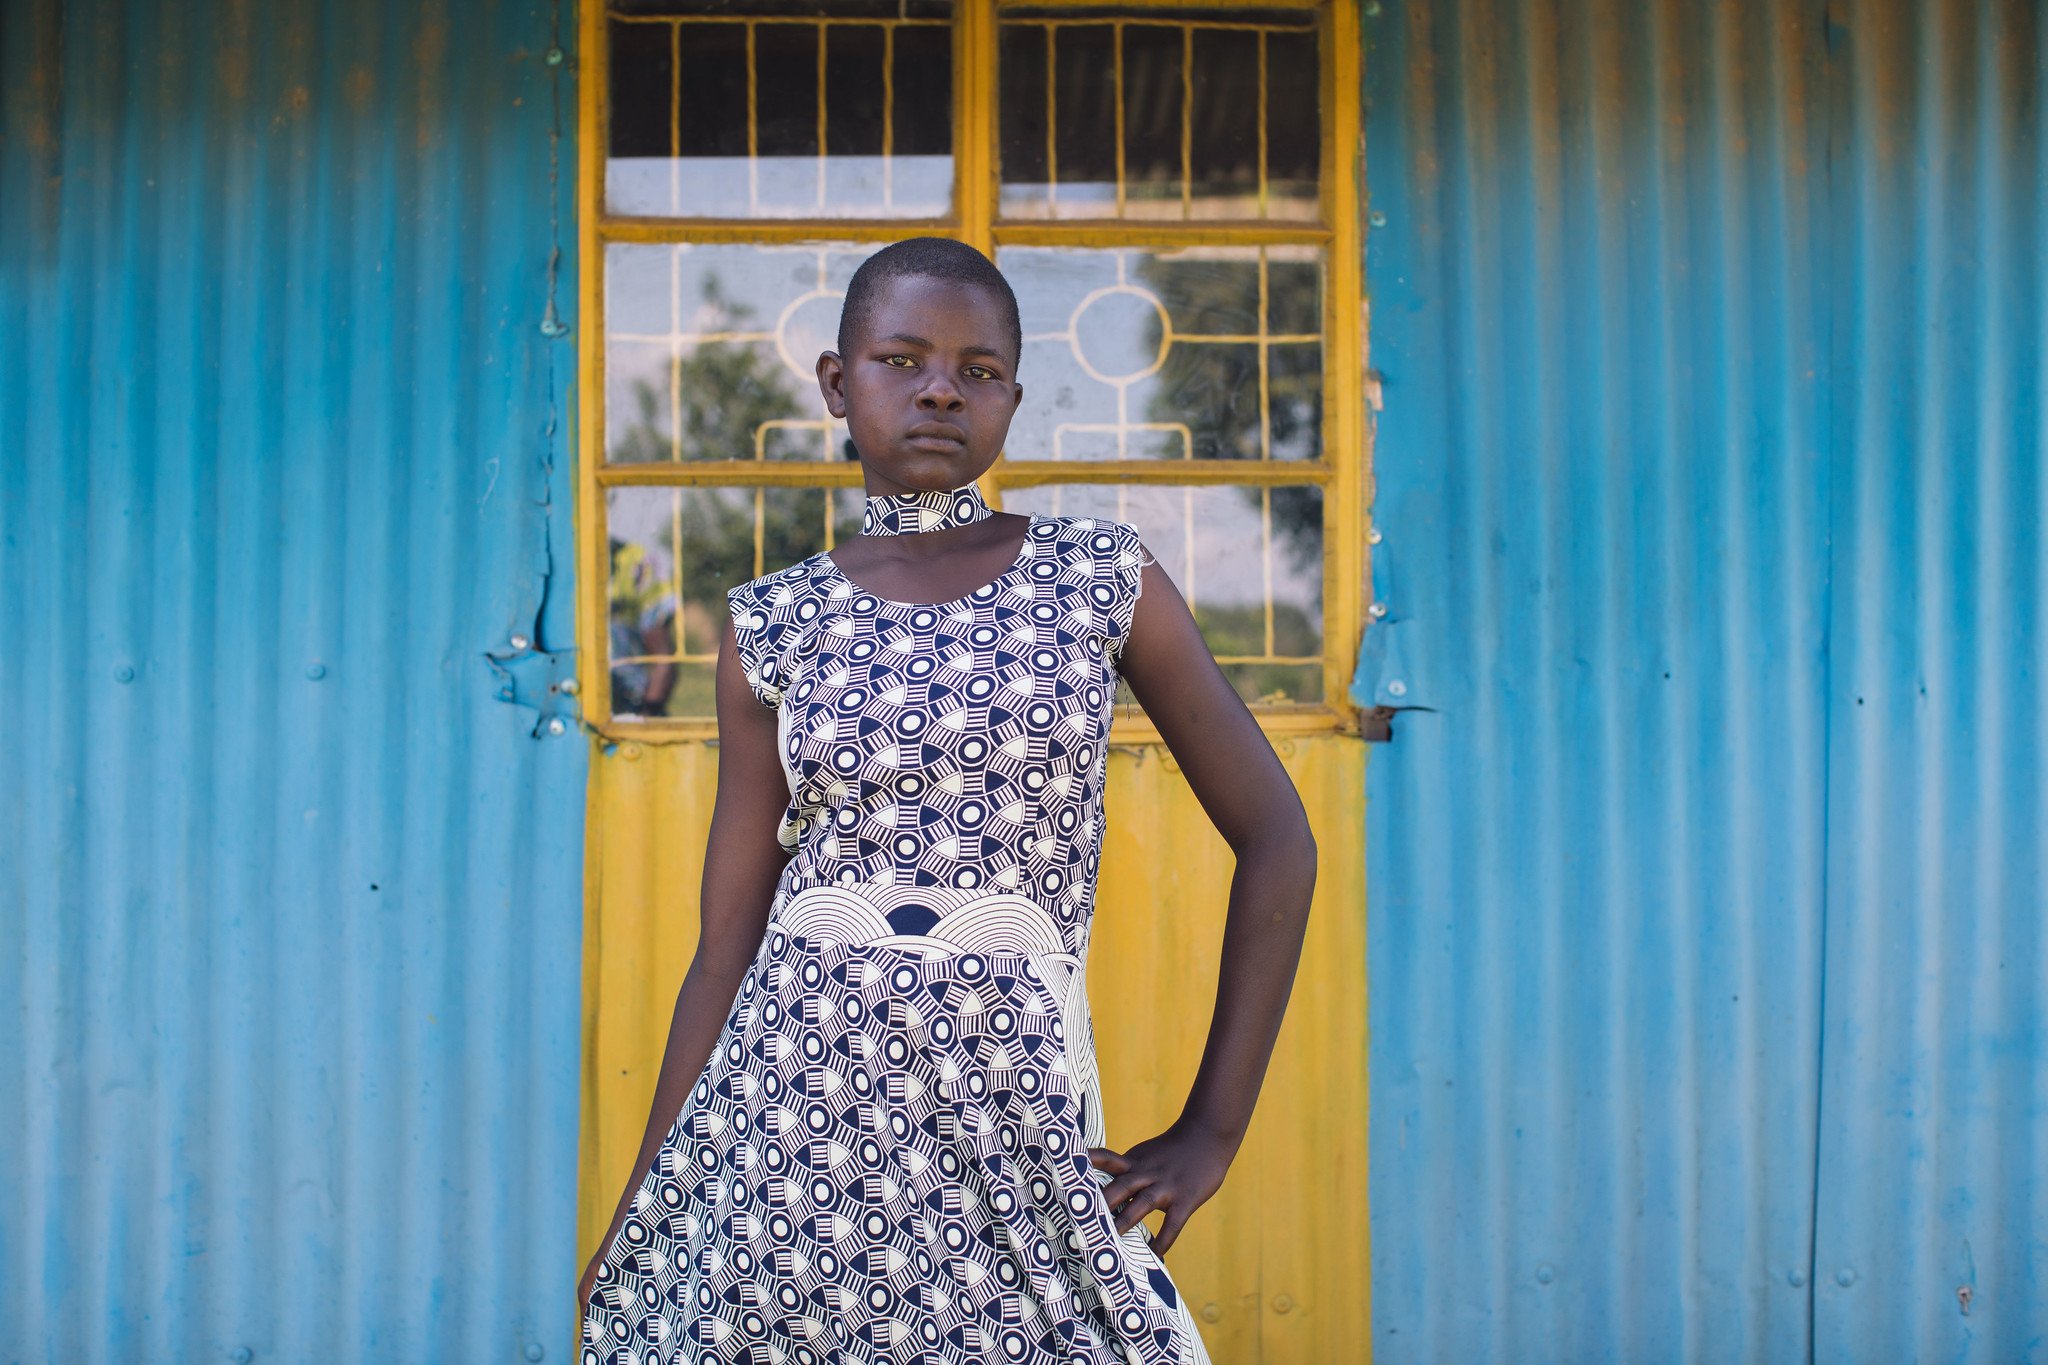 Msichana Empowerment Kuria, Kenya (Photo by Sarah Waiswa)